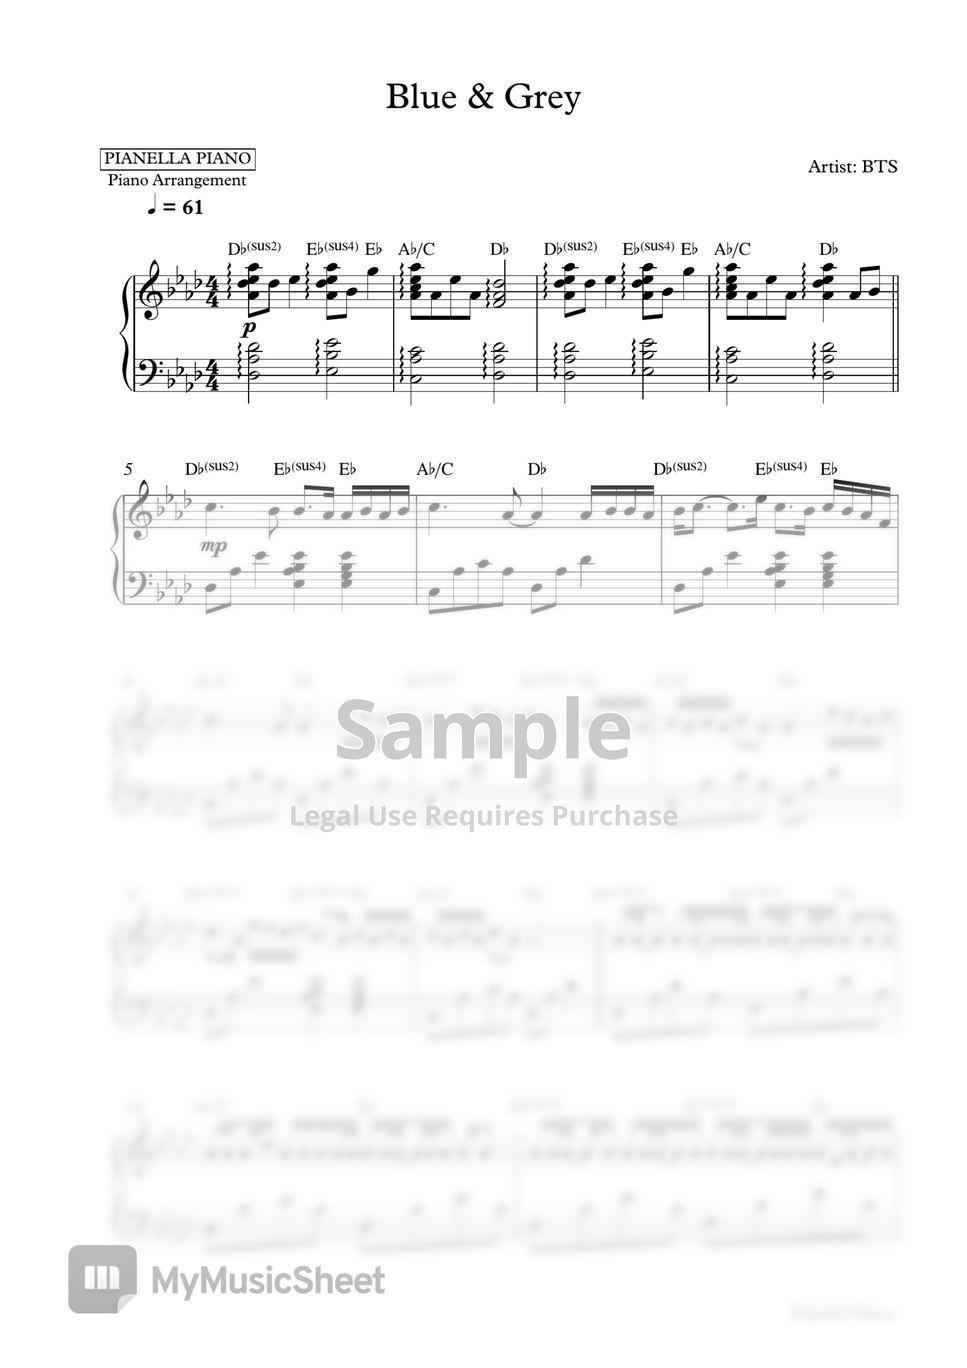 BTS - Blue & Grey (Piano Sheet) by Pianella Piano